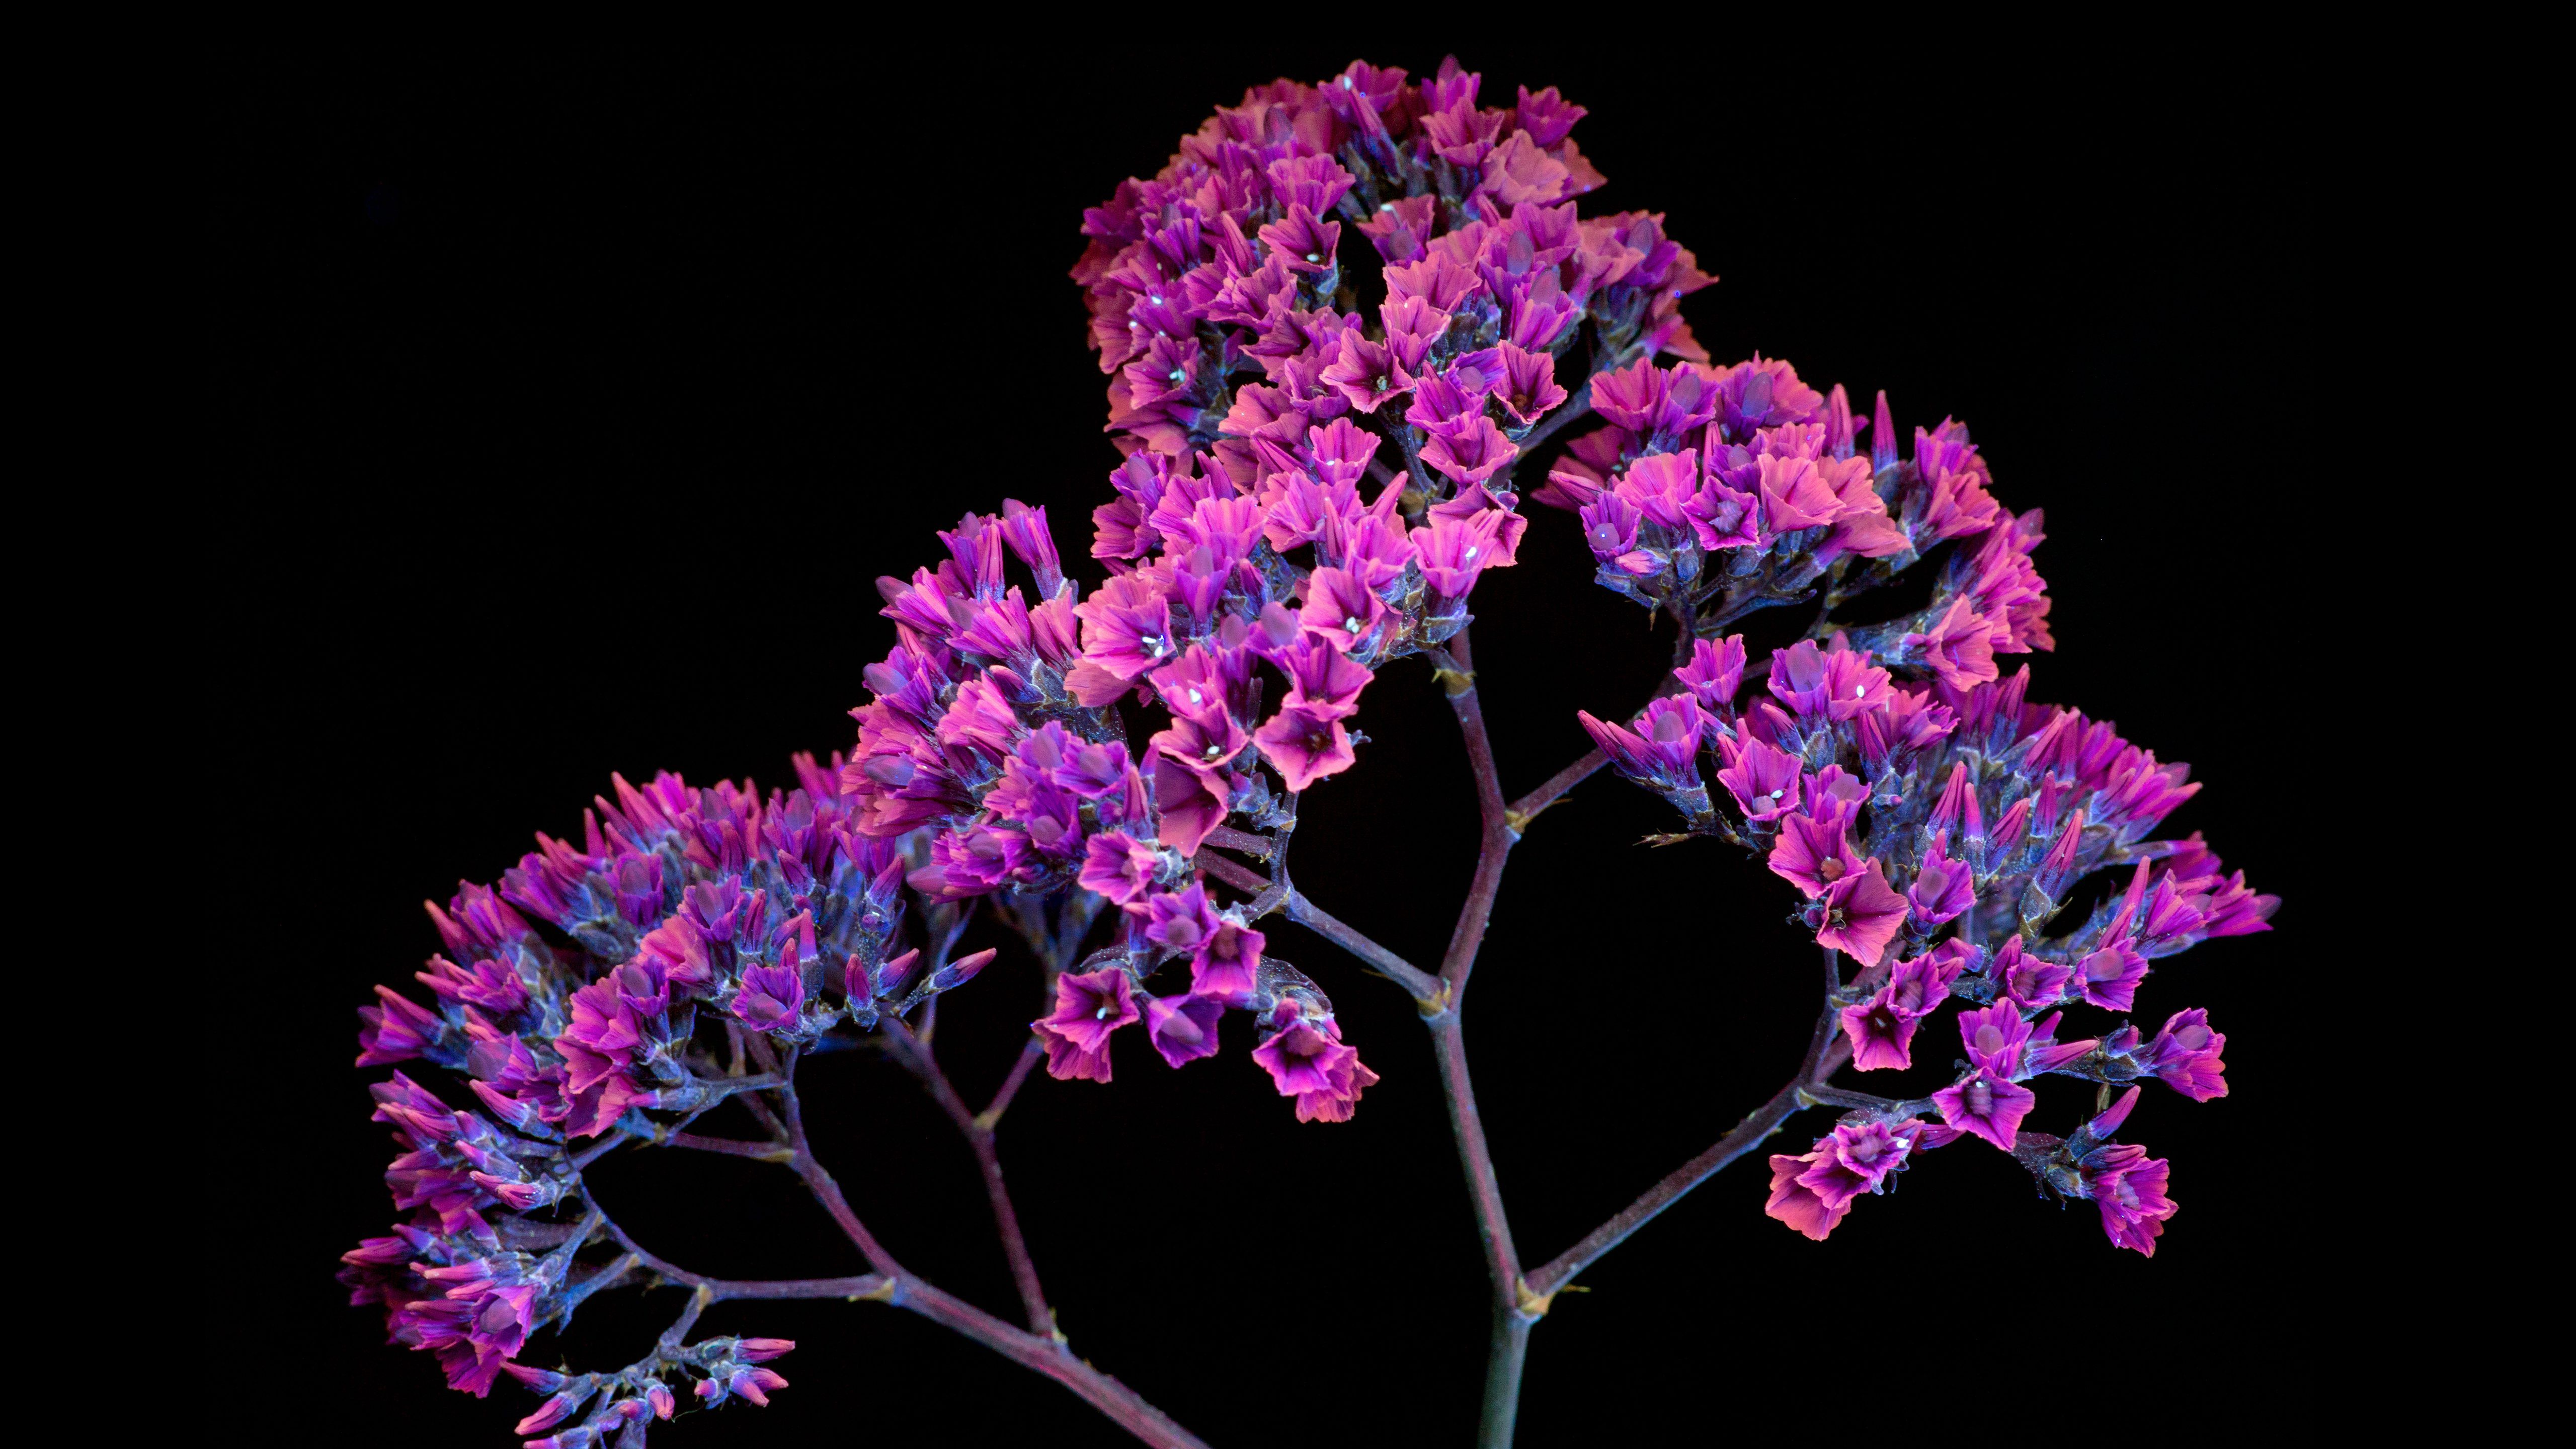 Oled Purple Flower, HD Flowers, 4k Wallpaper, Image, Background